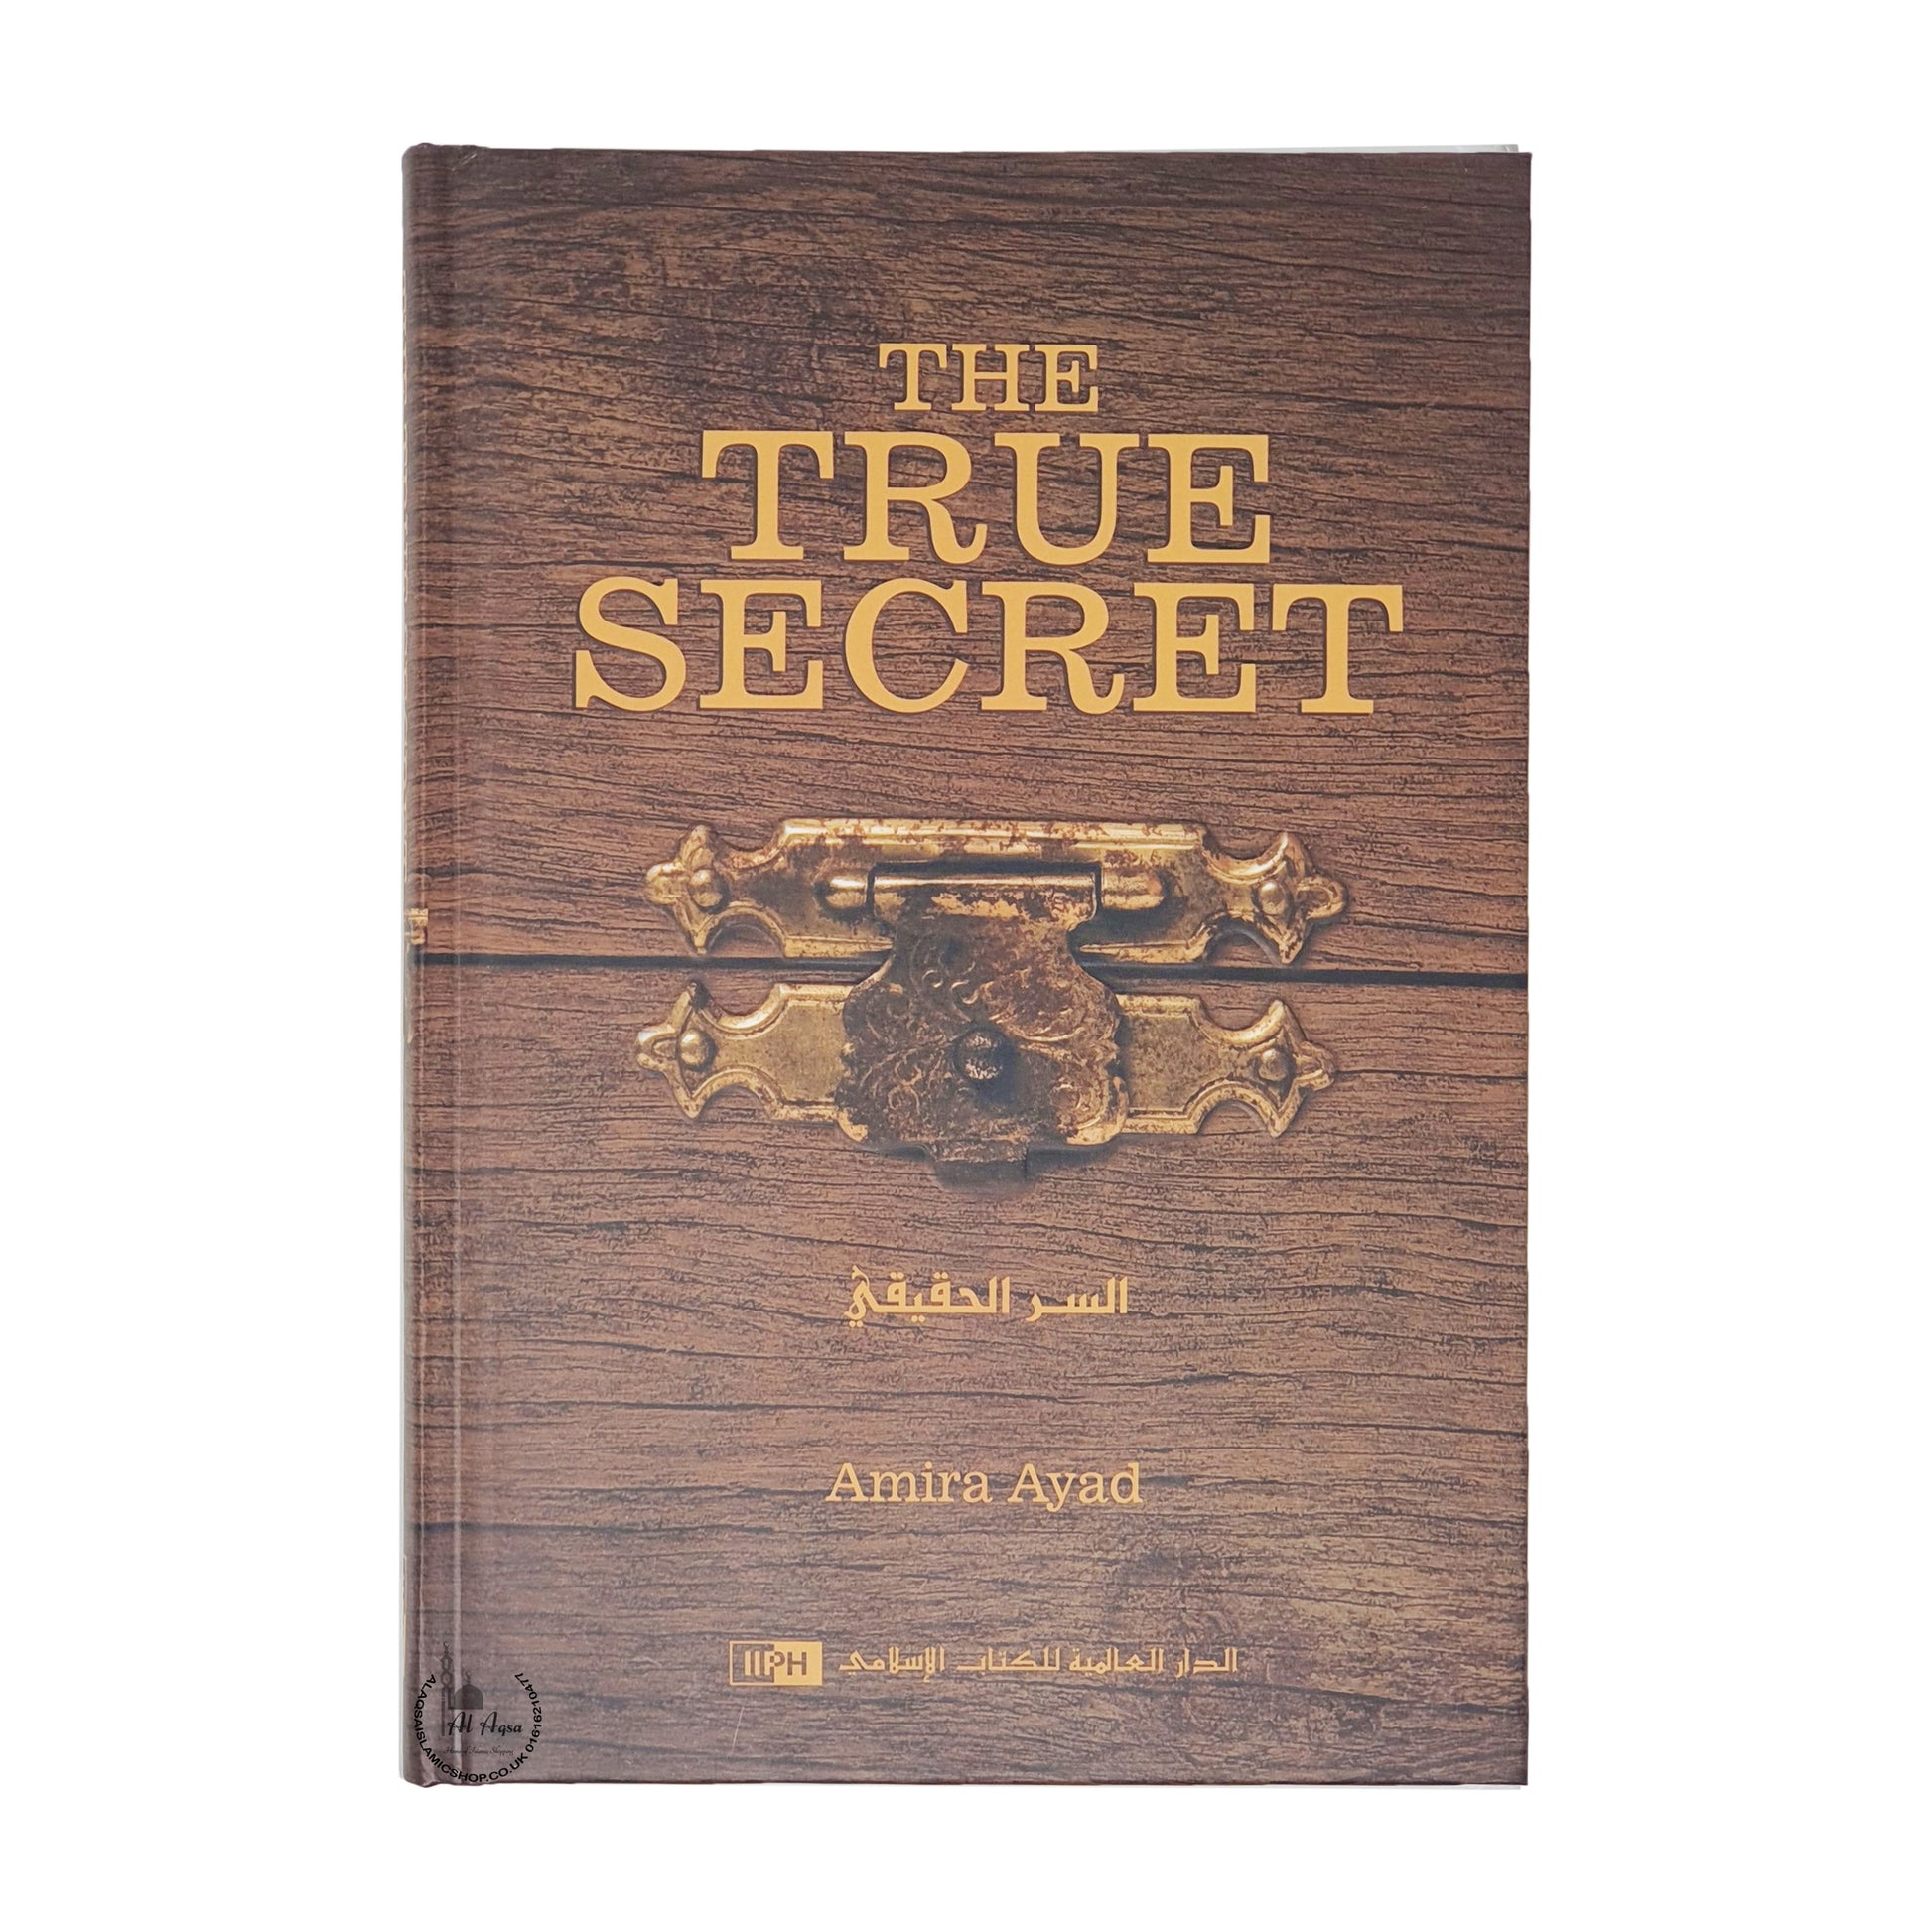 The True Secret